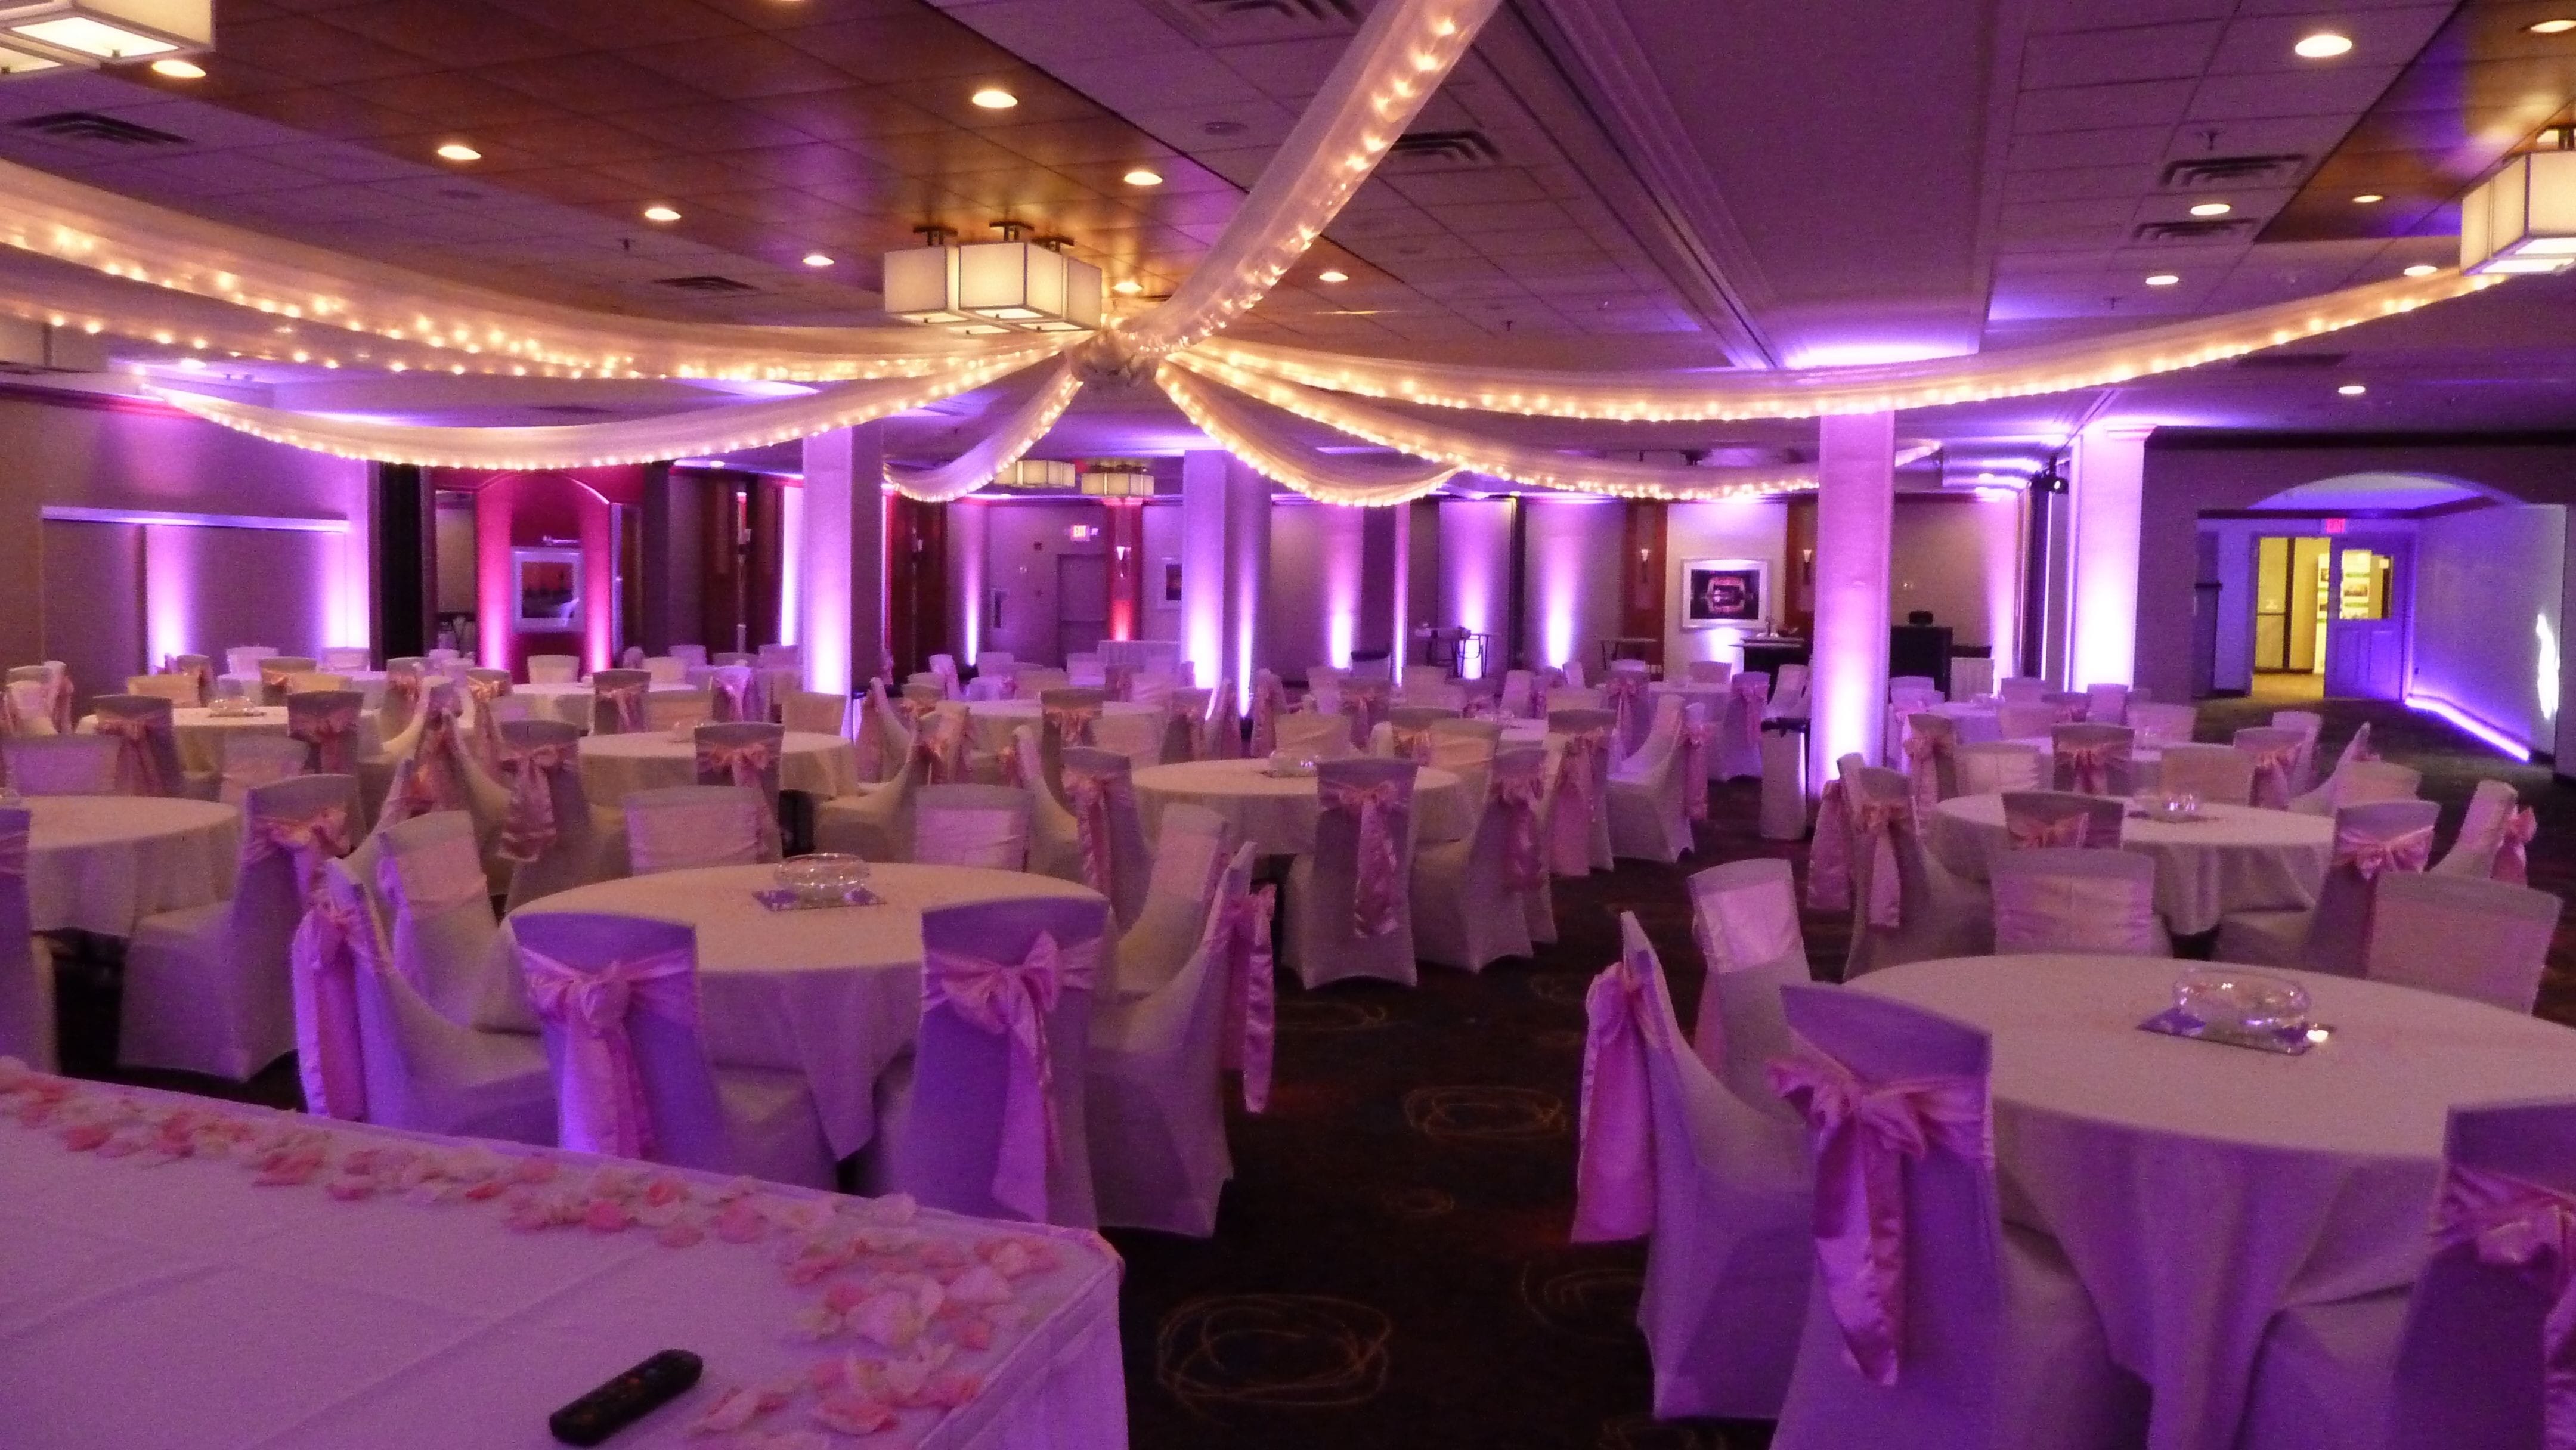 Holiday Inn, Duluth
Great Lakes Ballroom with pink wedding lighting.